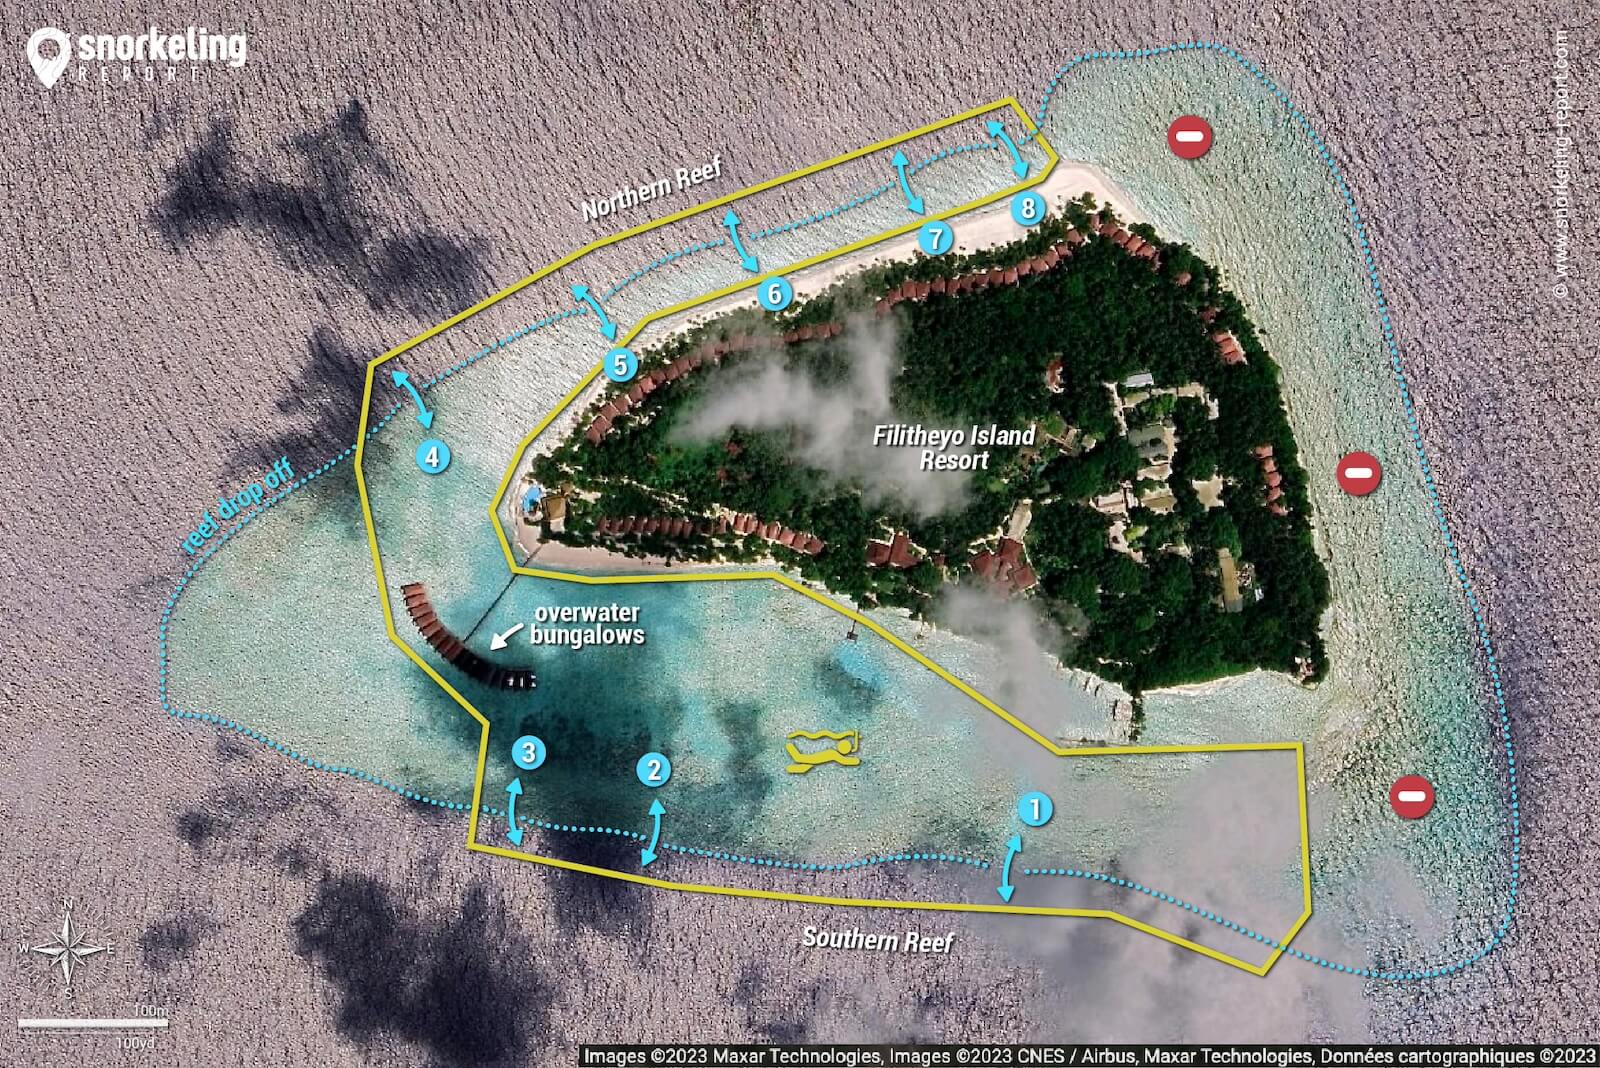 Filitheyo Island snorkeling map